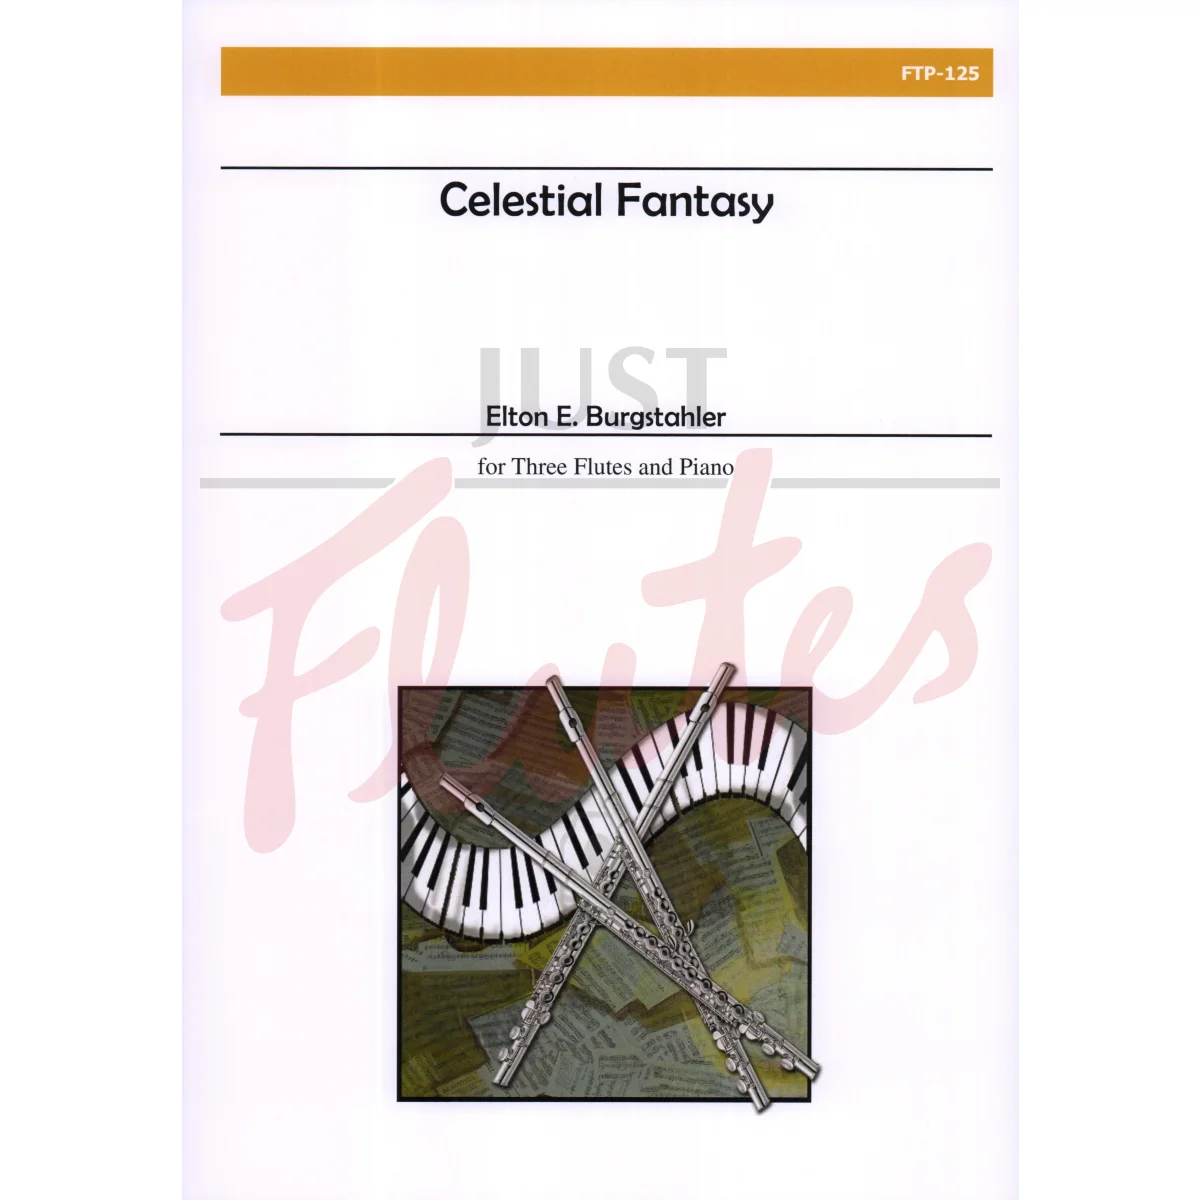 Celestial Fantasy for Three Flutes and Piano